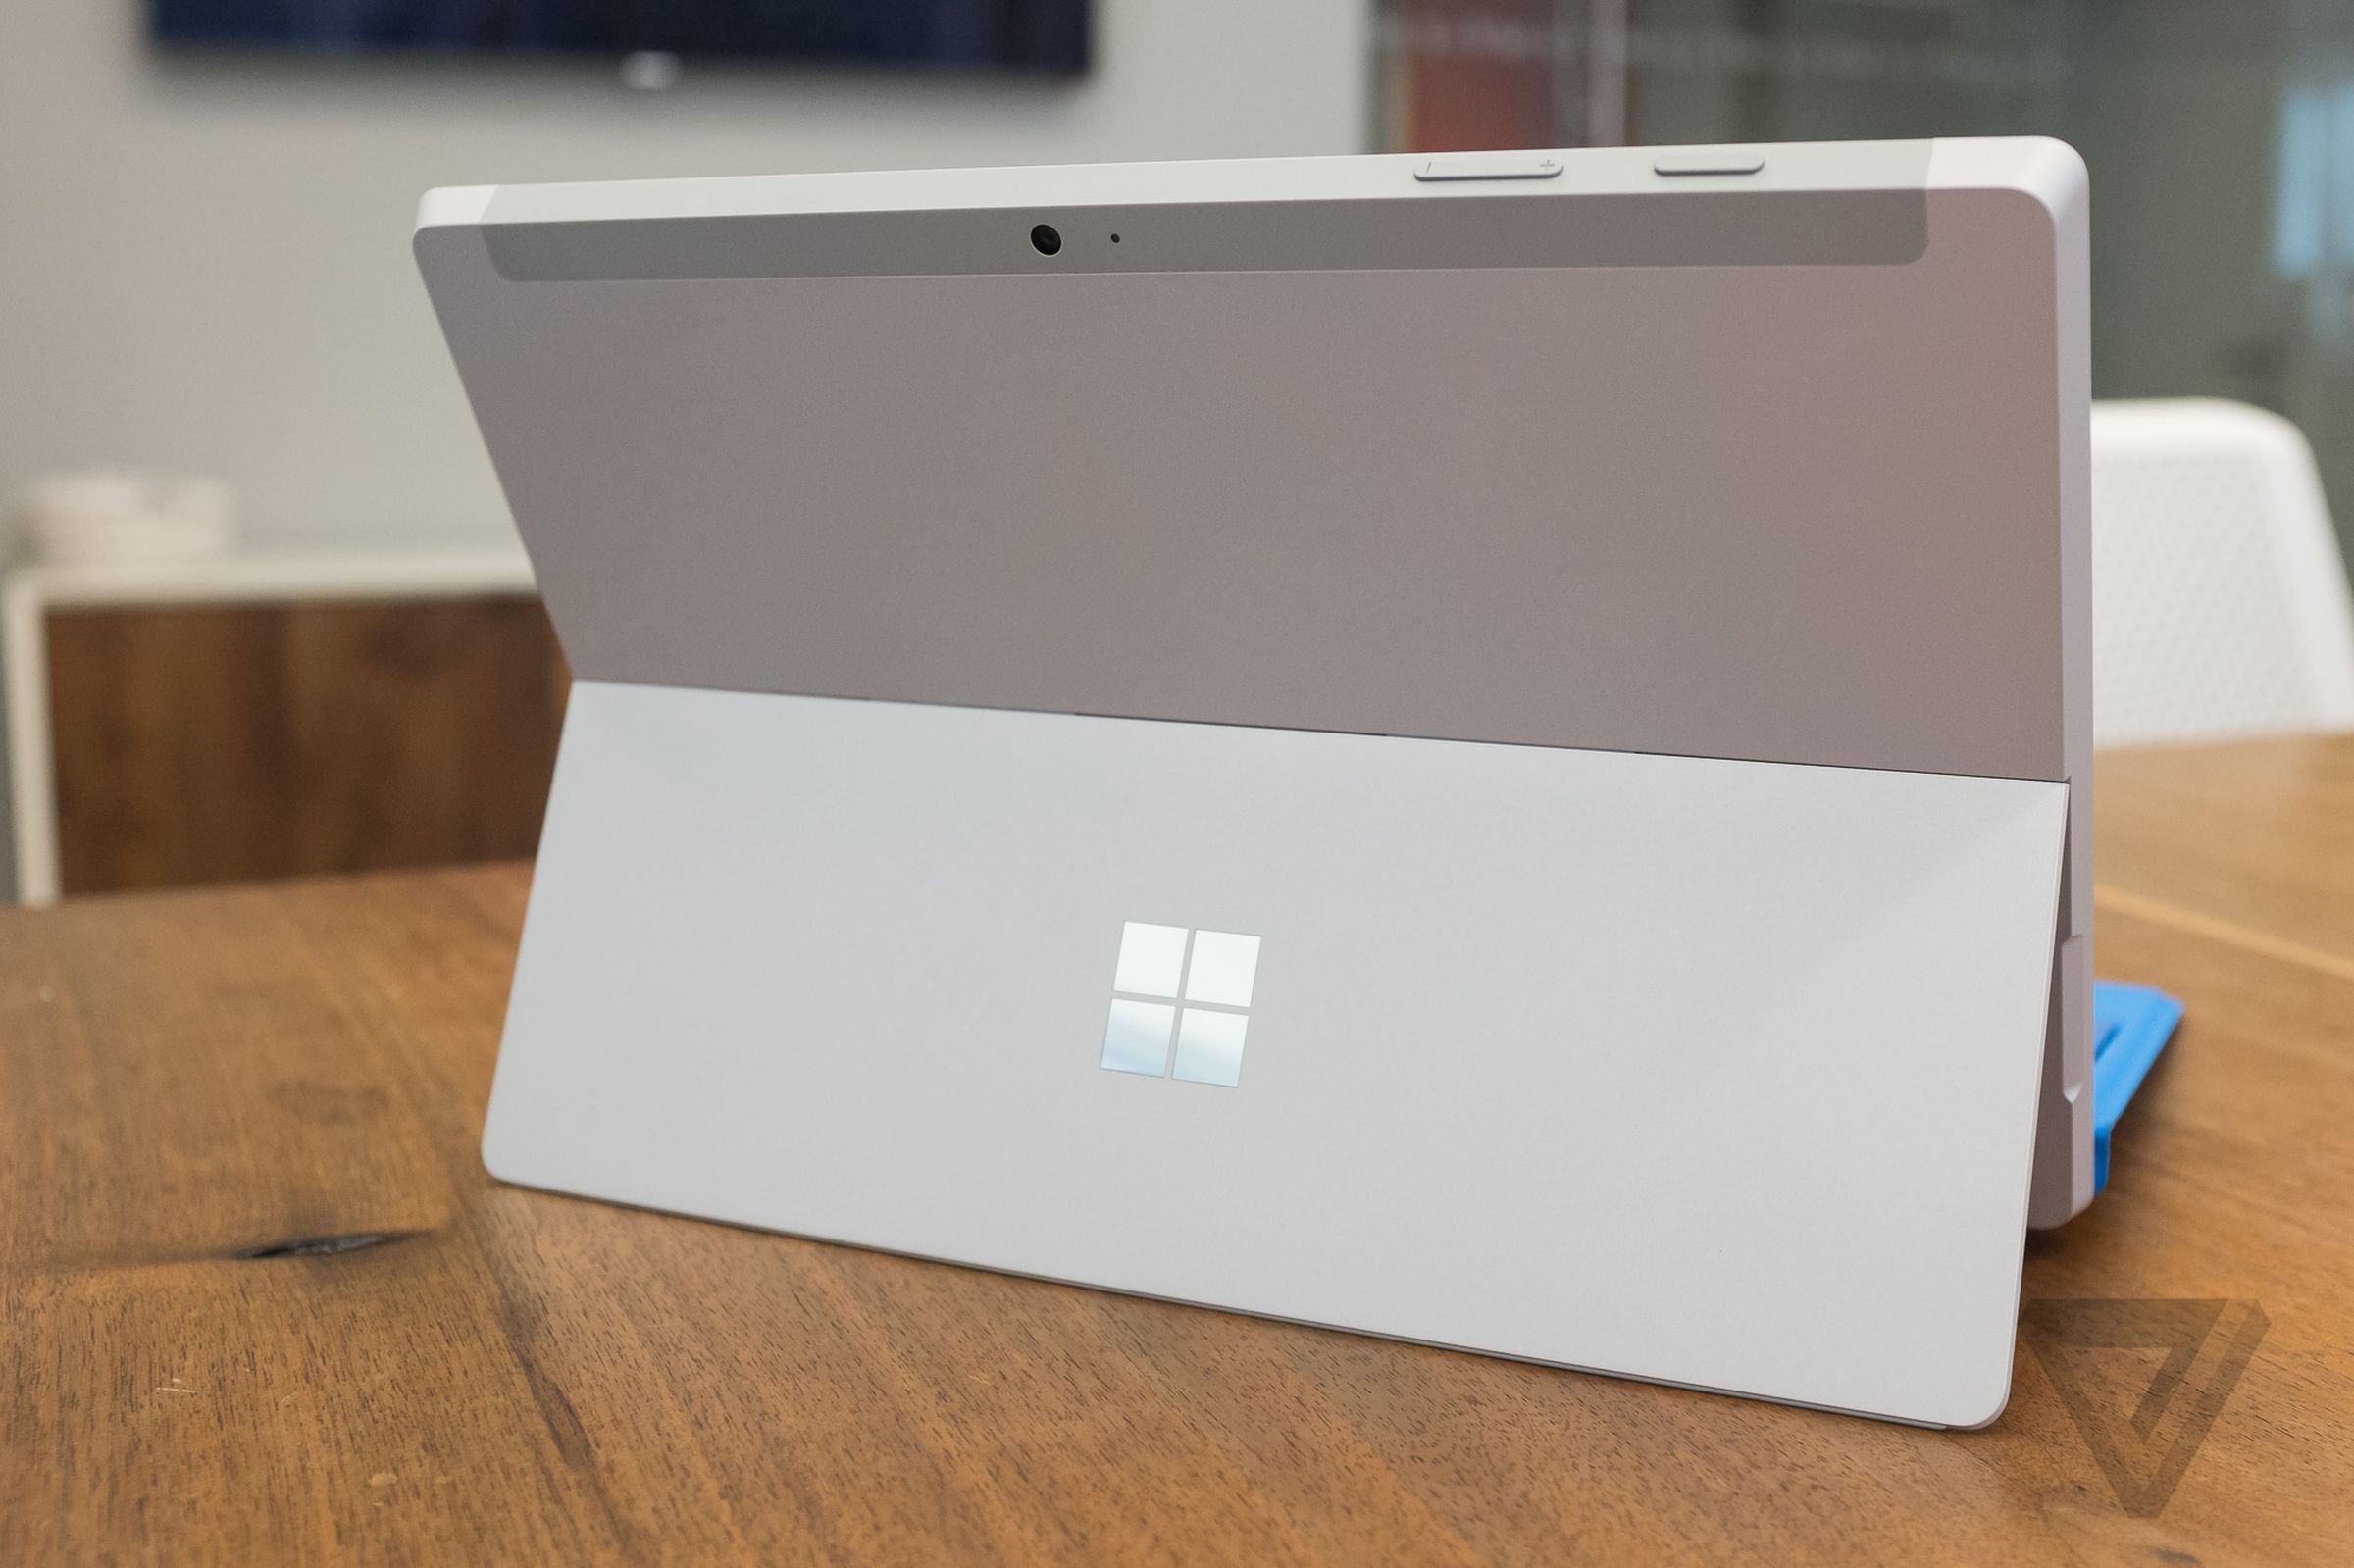 Microsoft Surface 3 hands-on photos